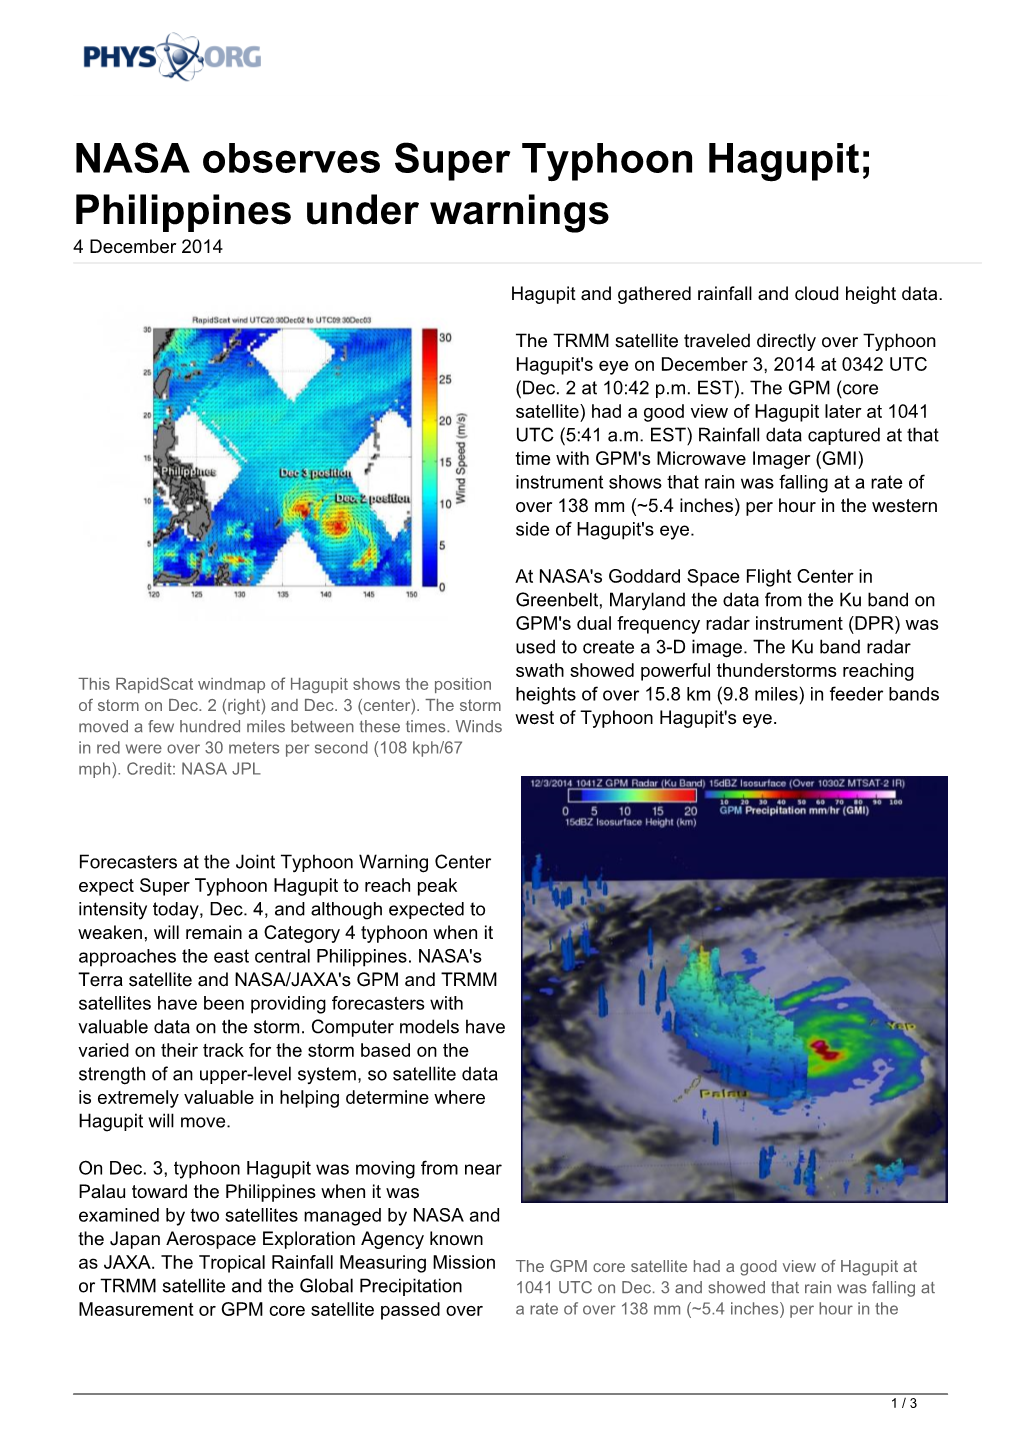 NASA Observes Super Typhoon Hagupit; Philippines Under Warnings 4 December 2014